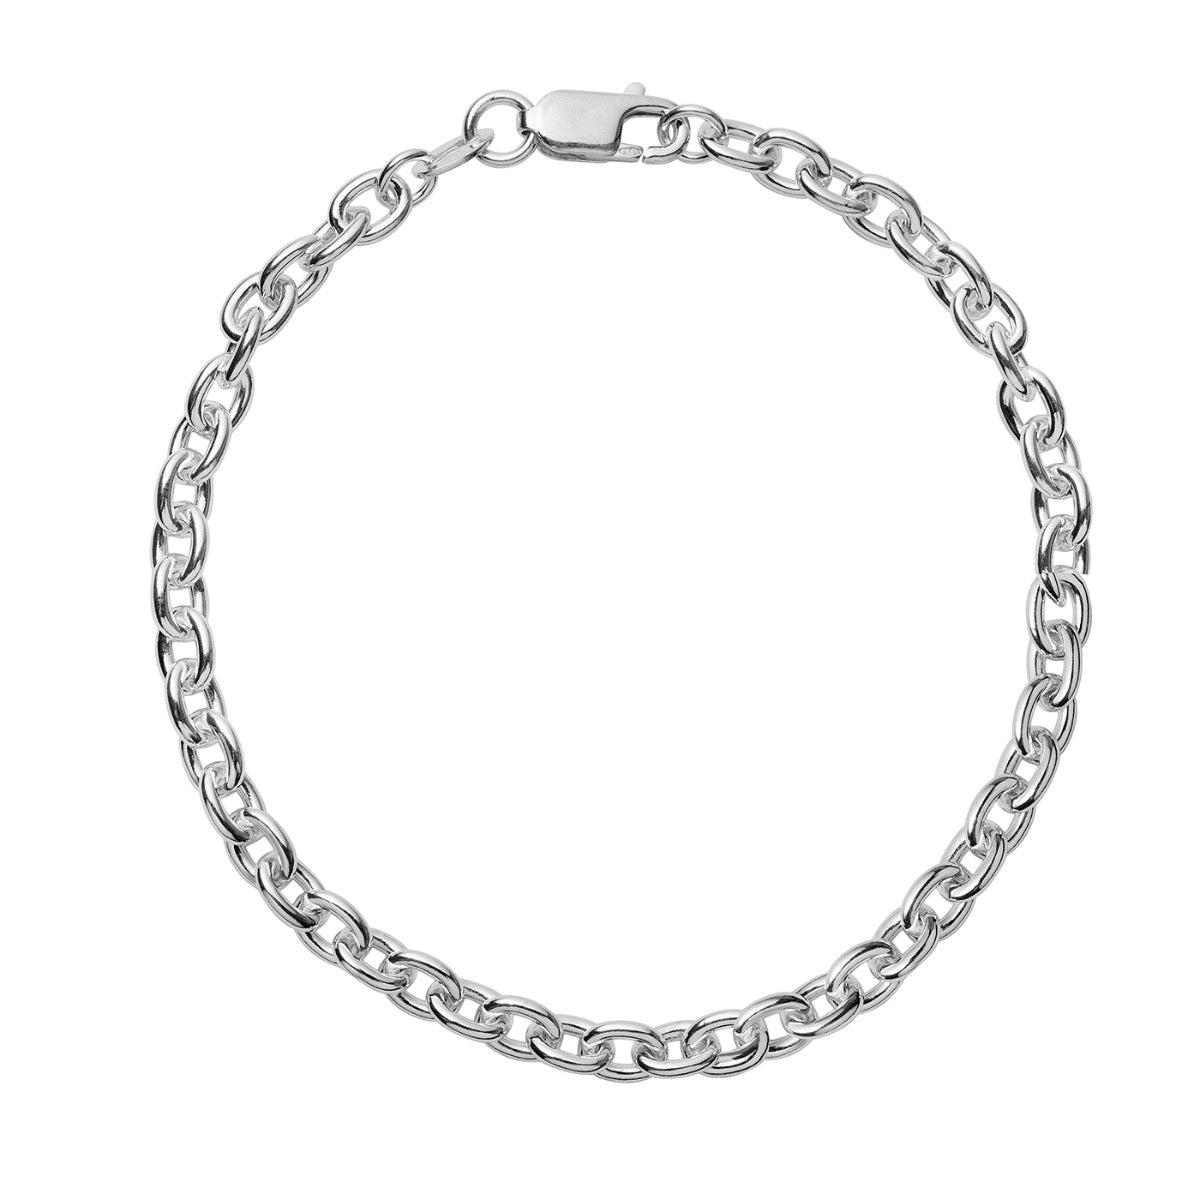 Womens 925 Silver Charm Bracelet Adjustable Length 17cm-20cm | TreasureBay